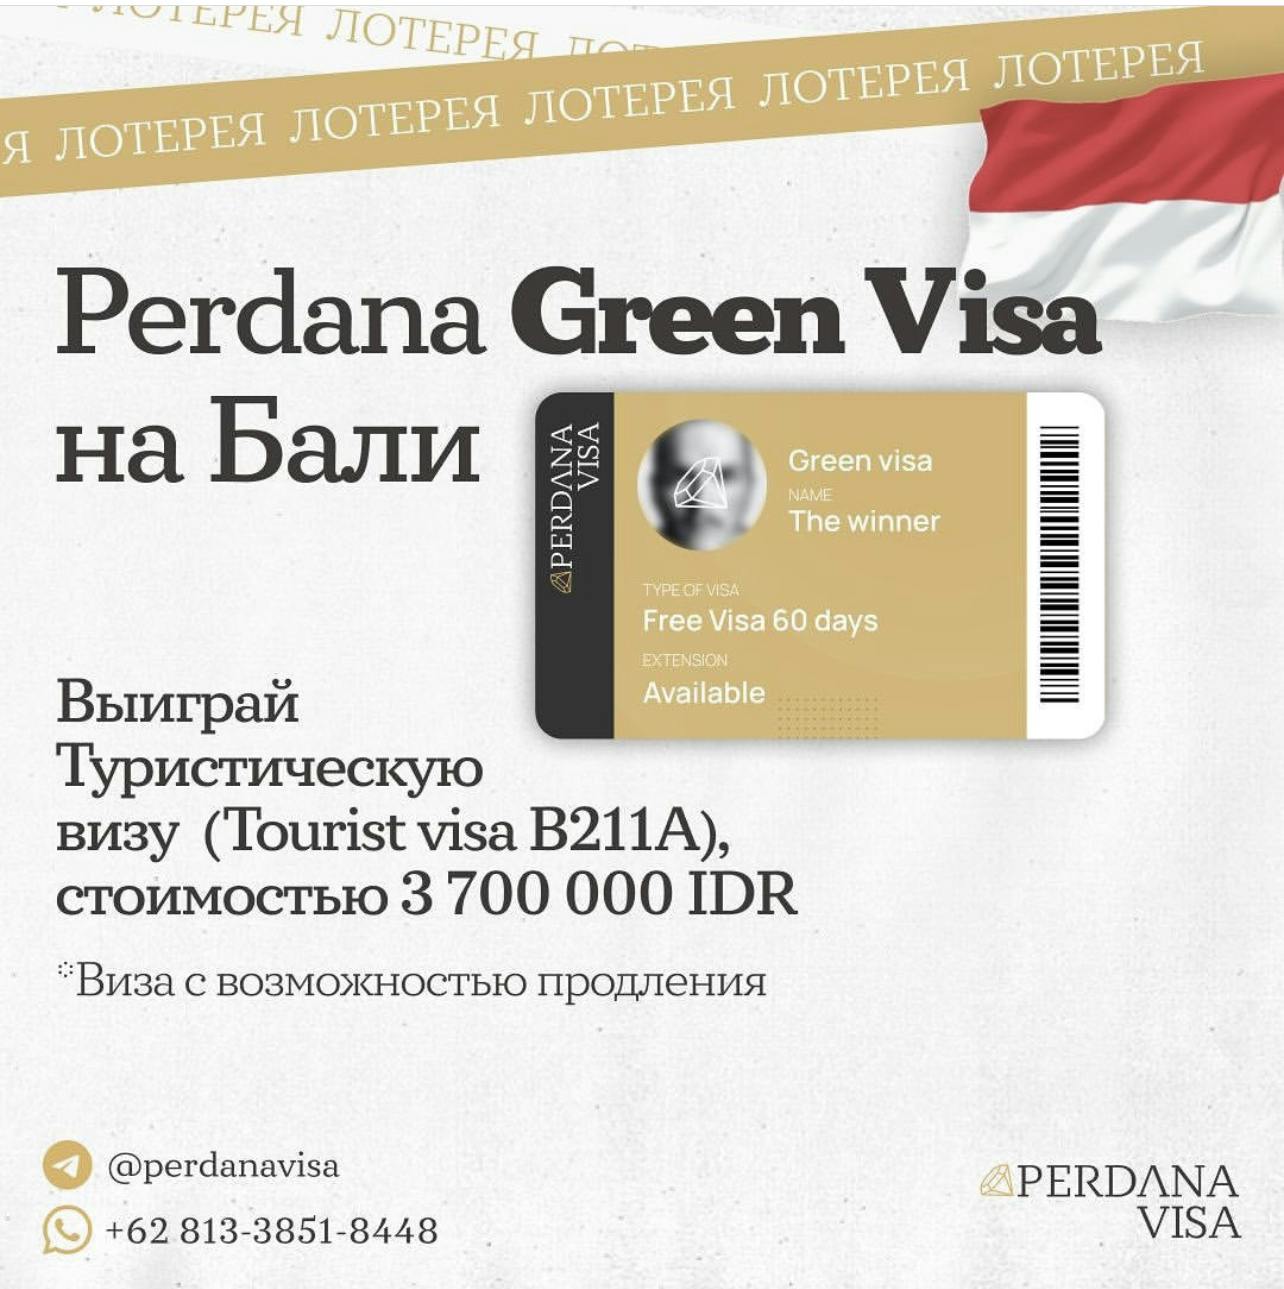 Perdana Green Visa